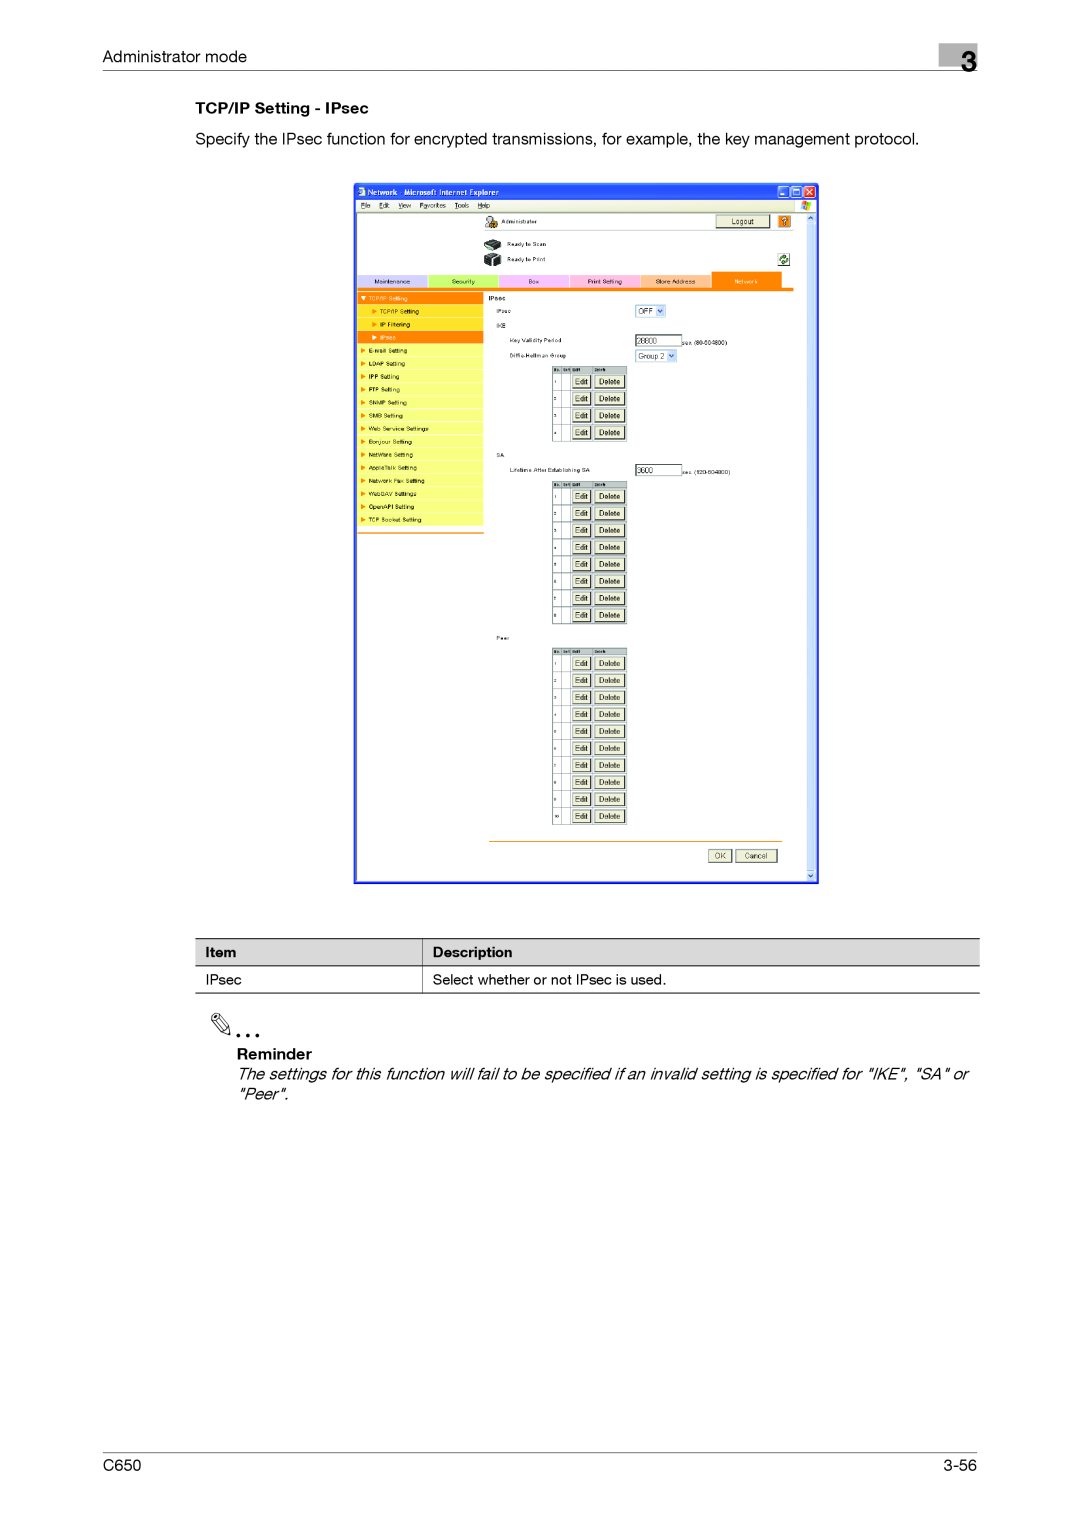 Konica Minolta C650 manual Administrator mode, TCP/IP Setting - IPsec, Reminder, 3-56 